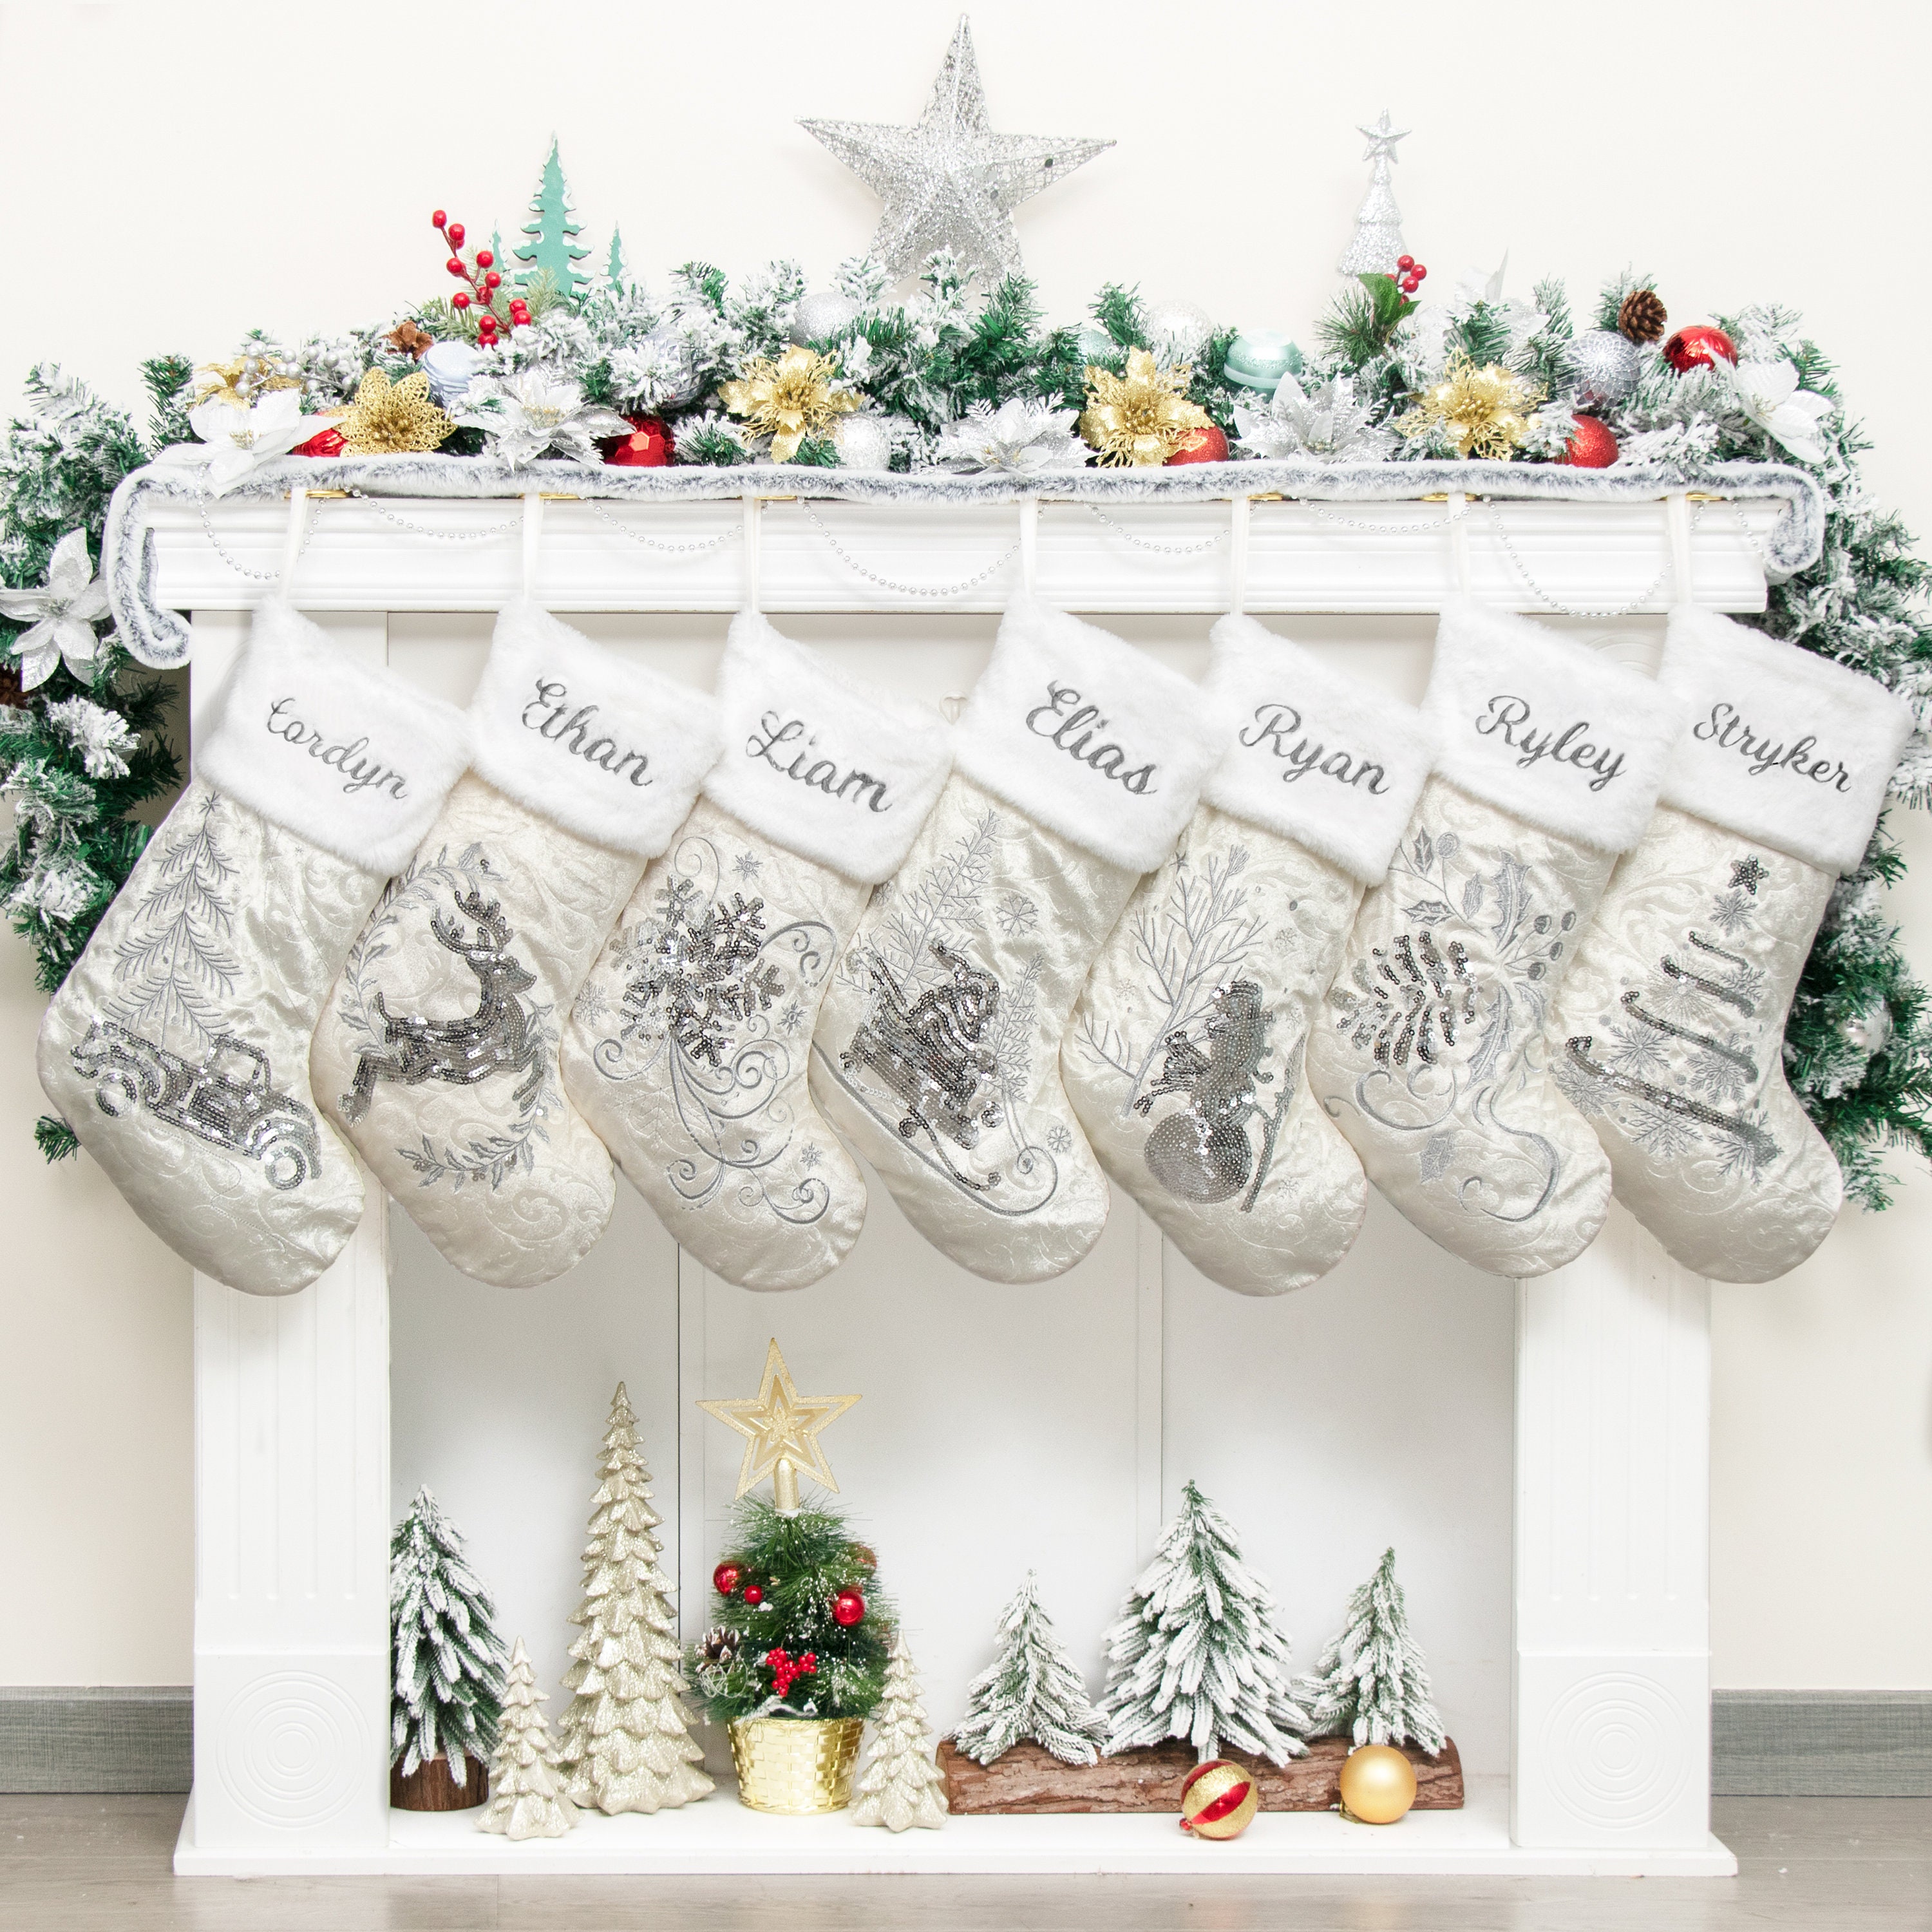 Discover Personalized Christmas Stockings Velvet Sequin Stockings